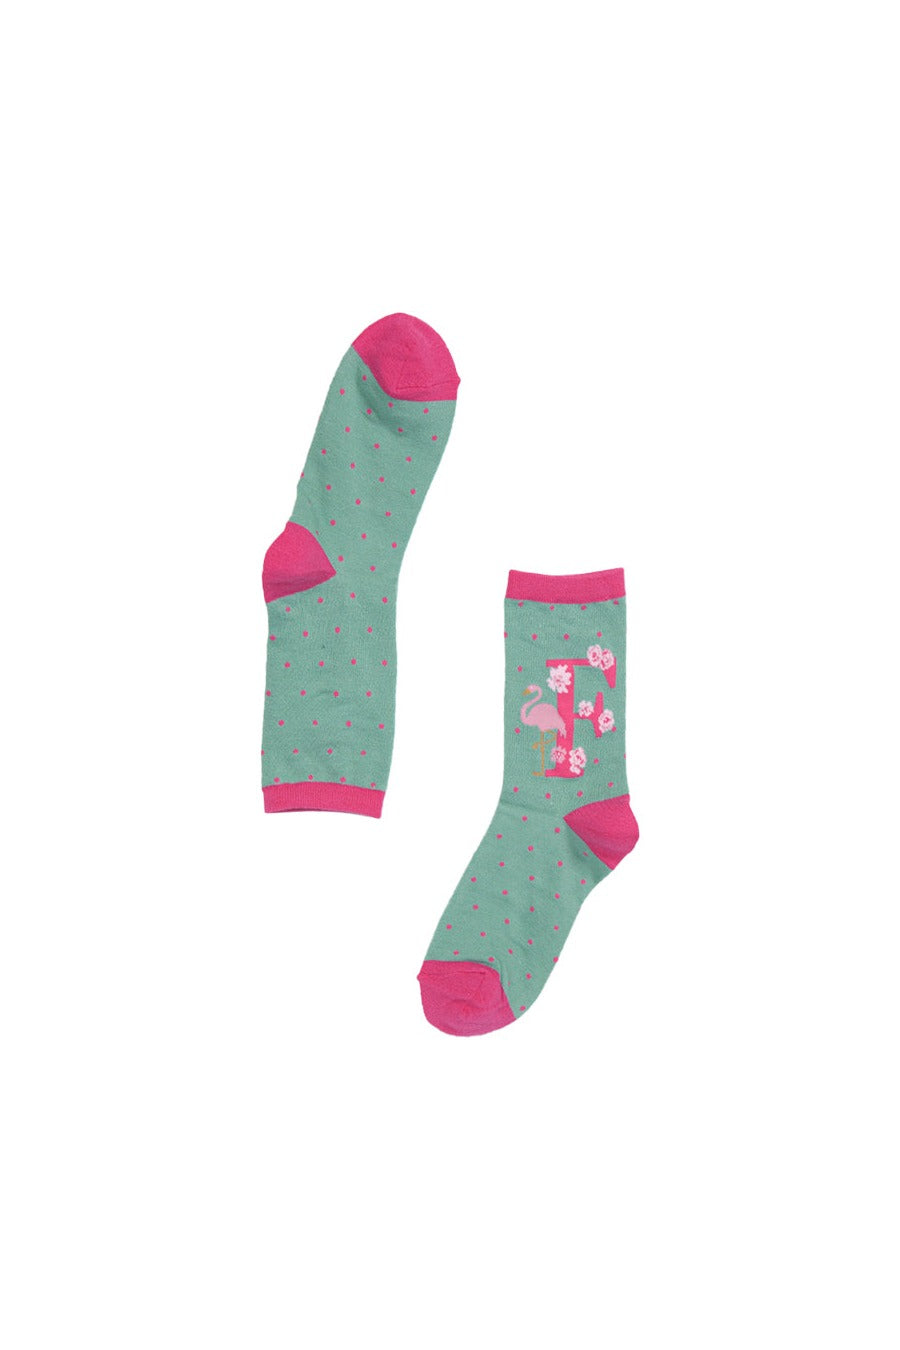 Womens Bamboo Alphabet Socks Initial F Novelty Floral Animal Ankle Socks